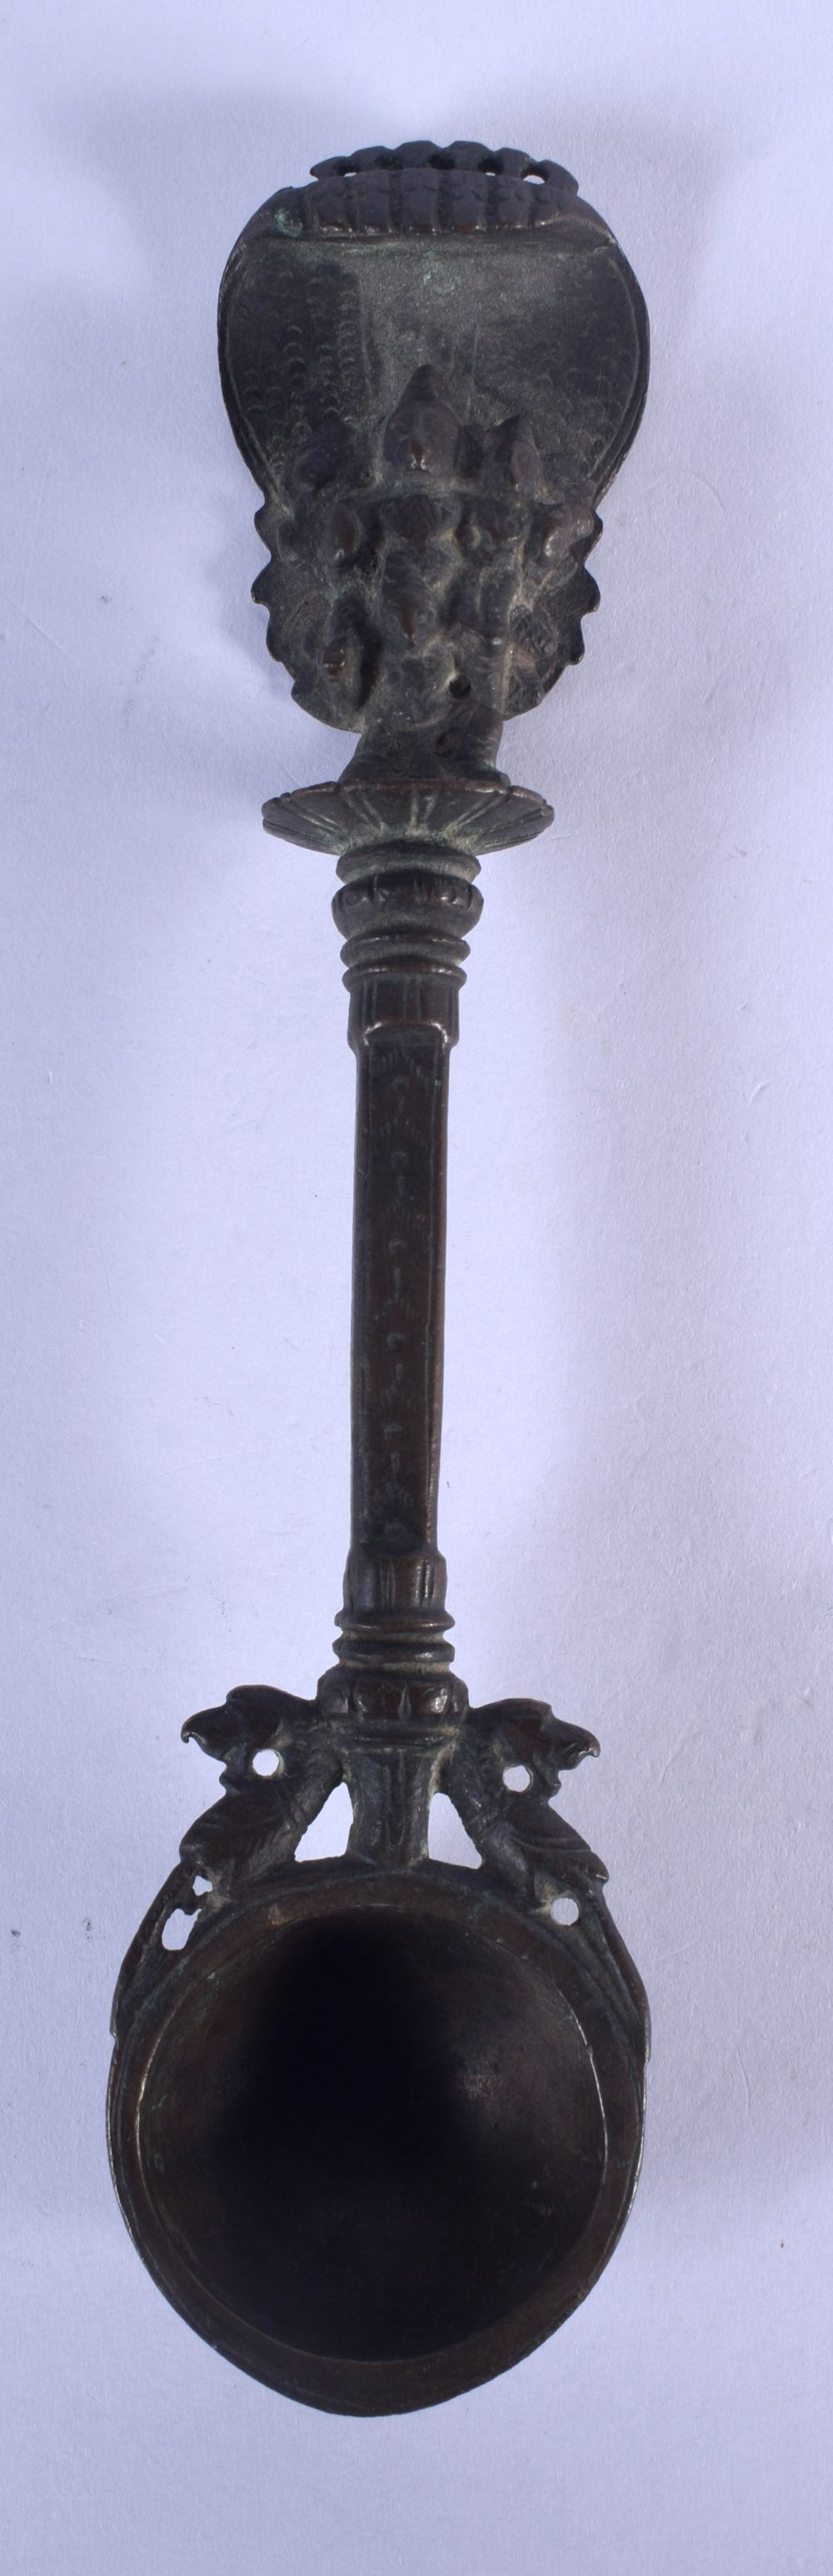 AN 18TH CENTURY INDIAN TIBETAN BRONZE SPOON. 14 cm long.